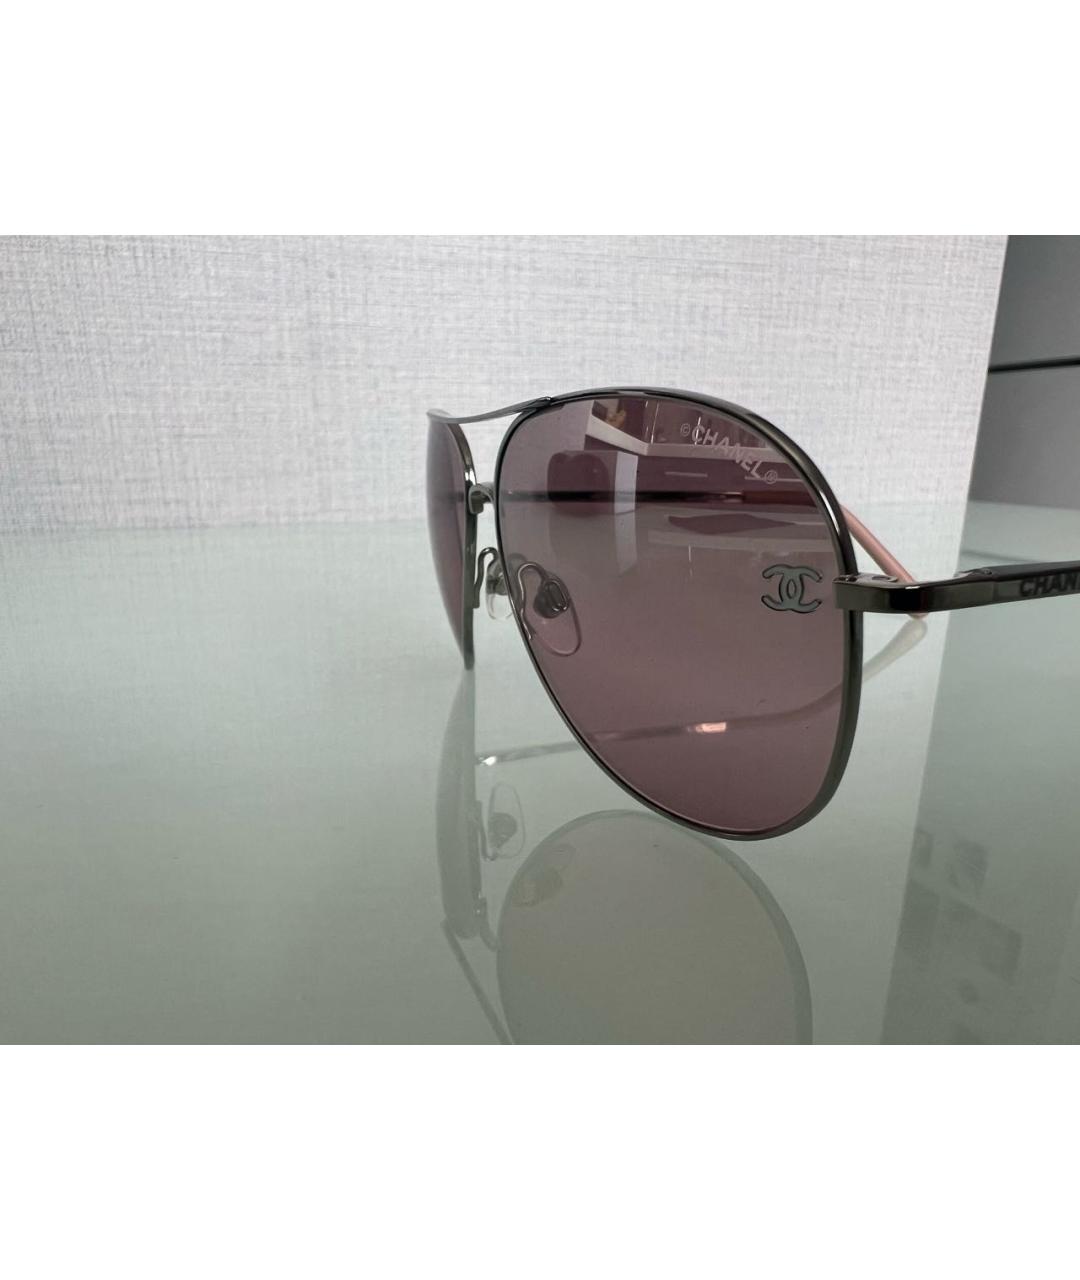 CHANEL PRE-OWNED Розовые металлические солнцезащитные очки, фото 2